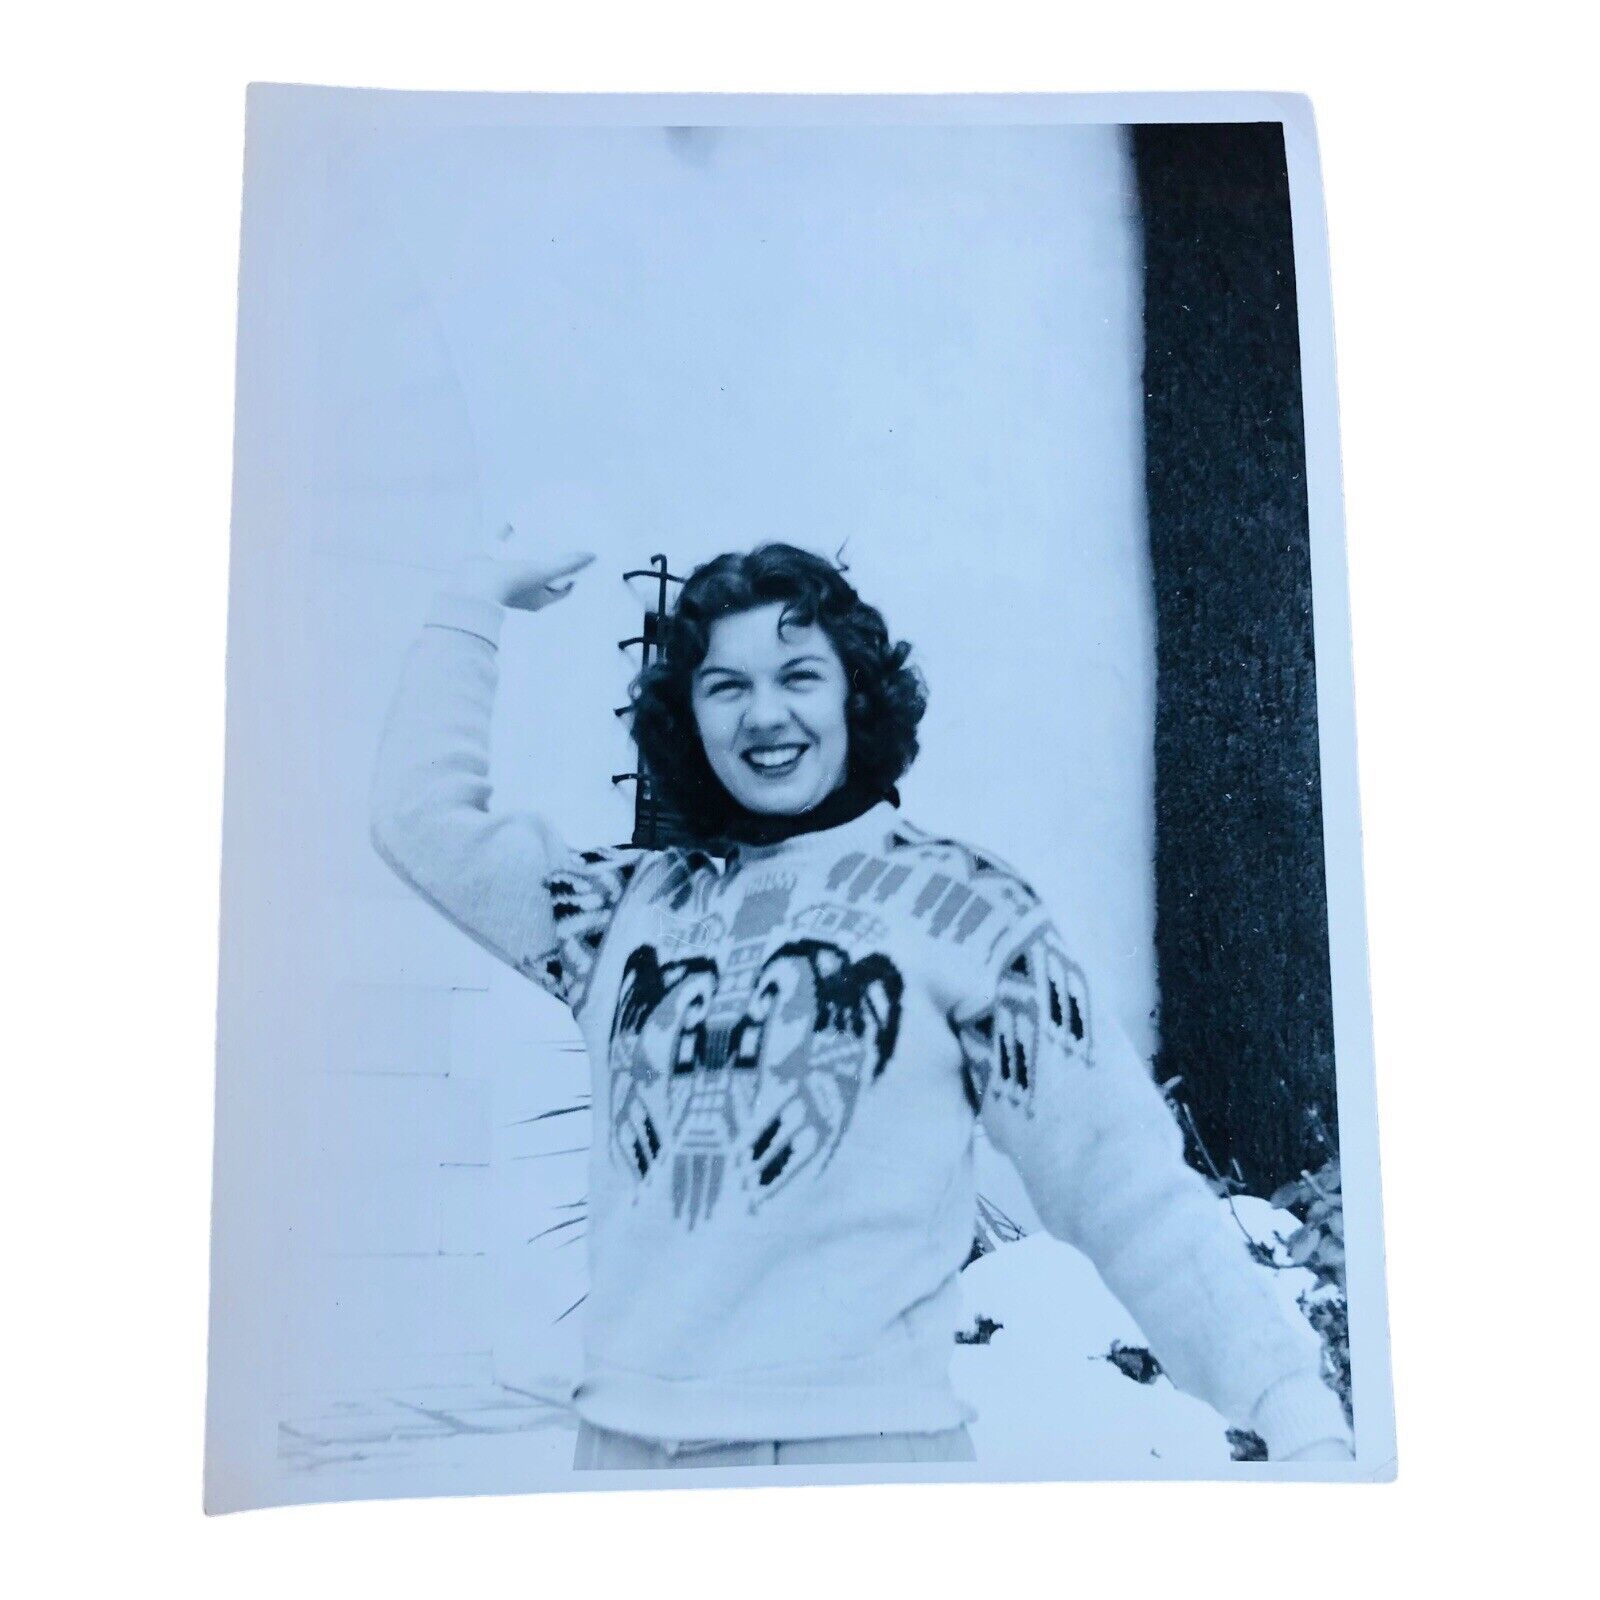 Vintage Photograph Young Lady Woman High School Tribal Sweater 40’s Fun 8x10 B&W